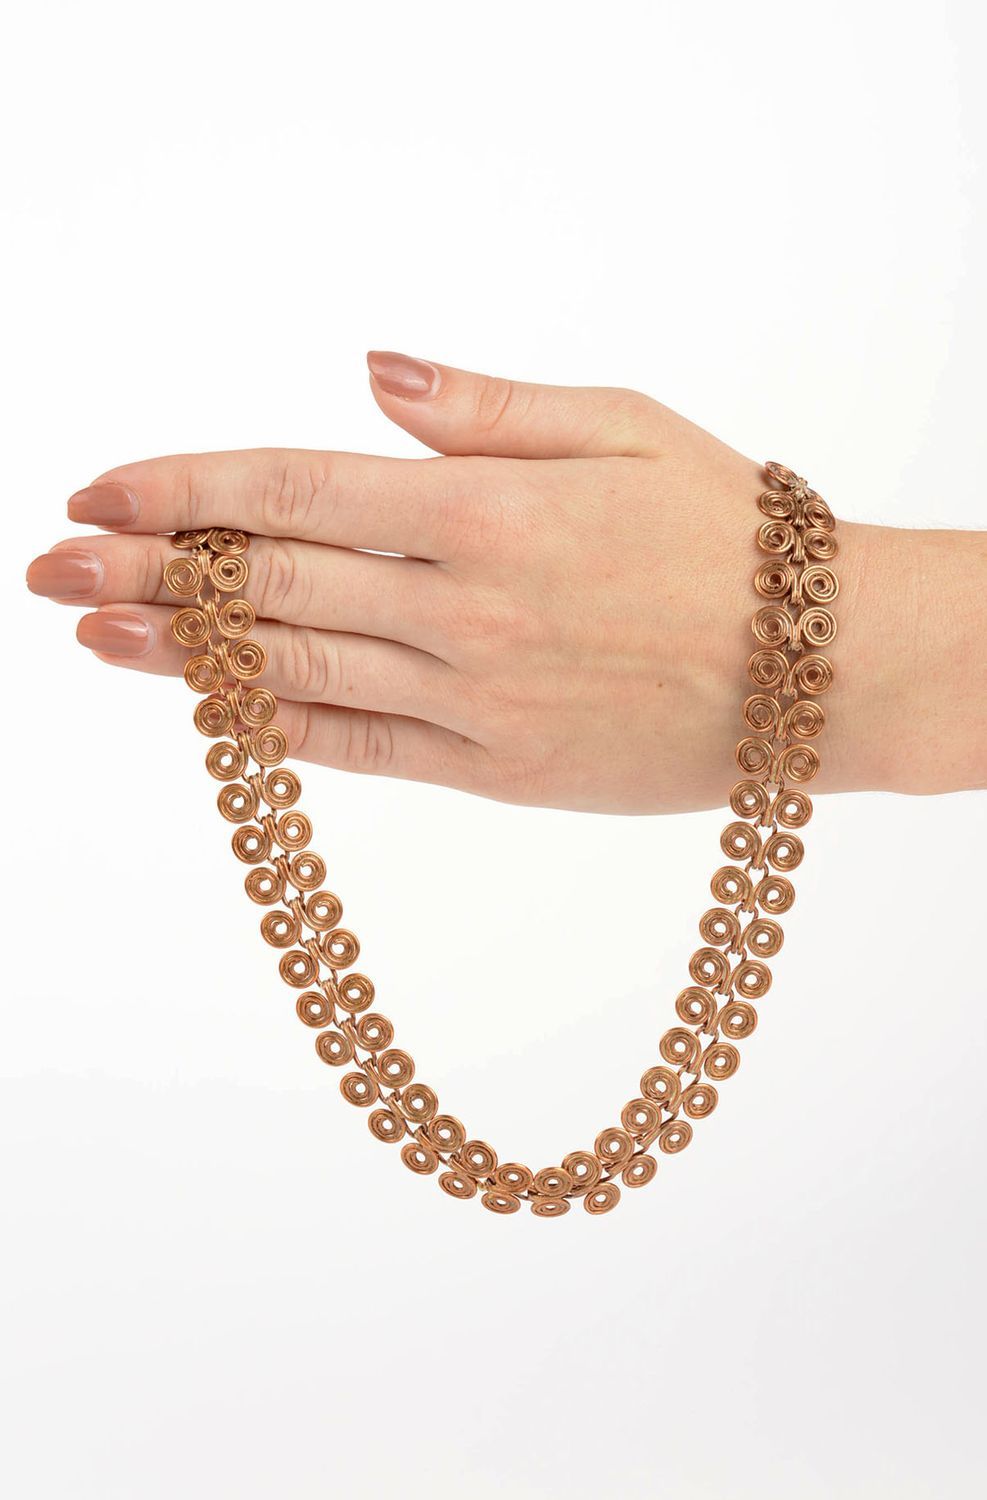 Handmade necklace unusual necklace designer accessory gift ideas copper jewelry photo 5